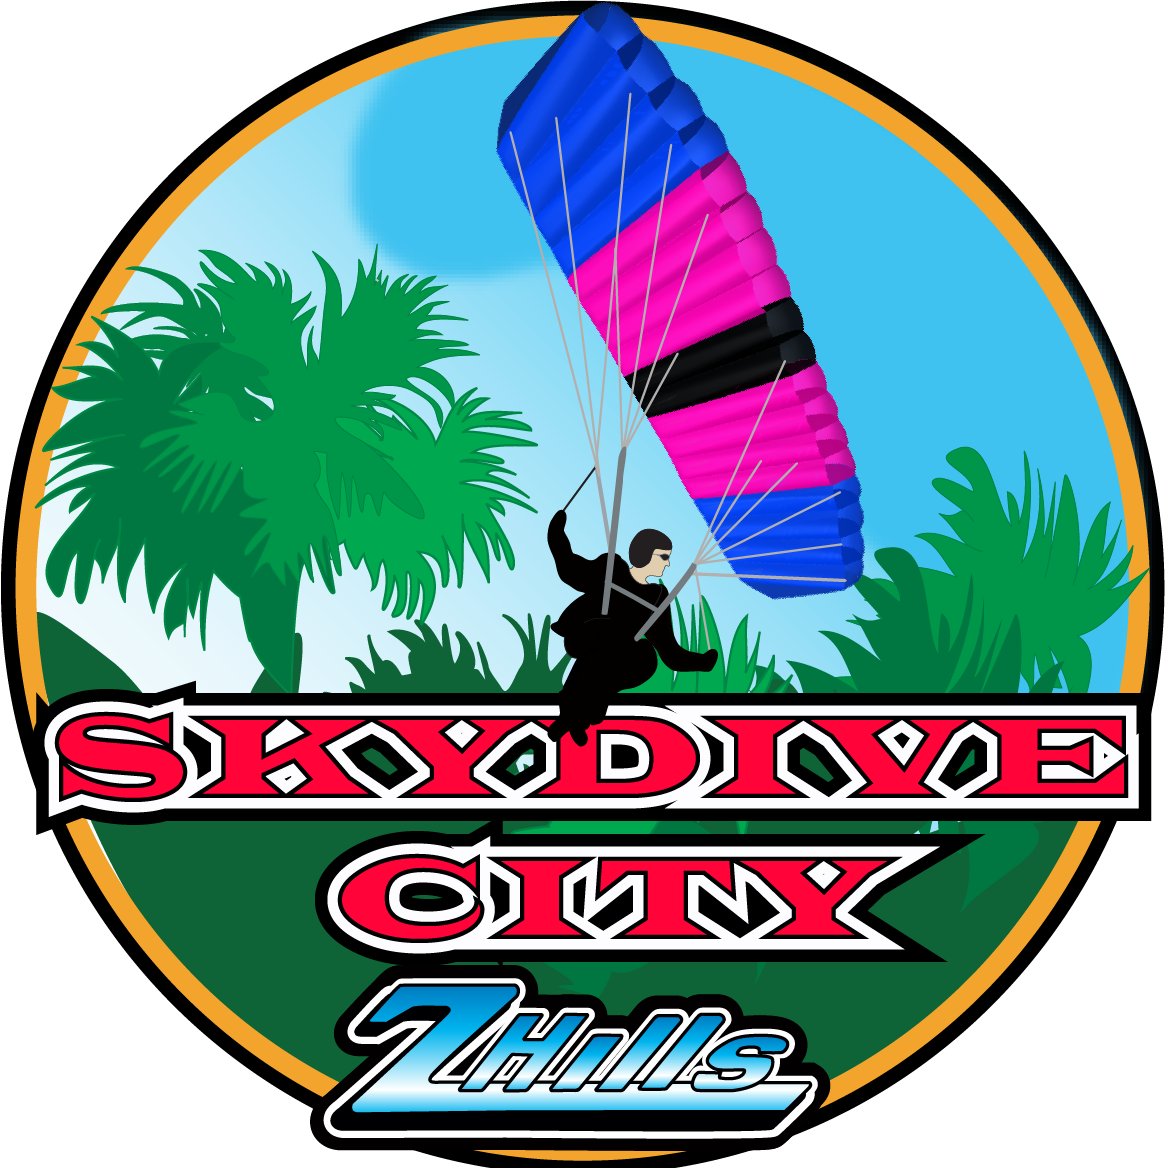 Skydive City (Z Hills) logo